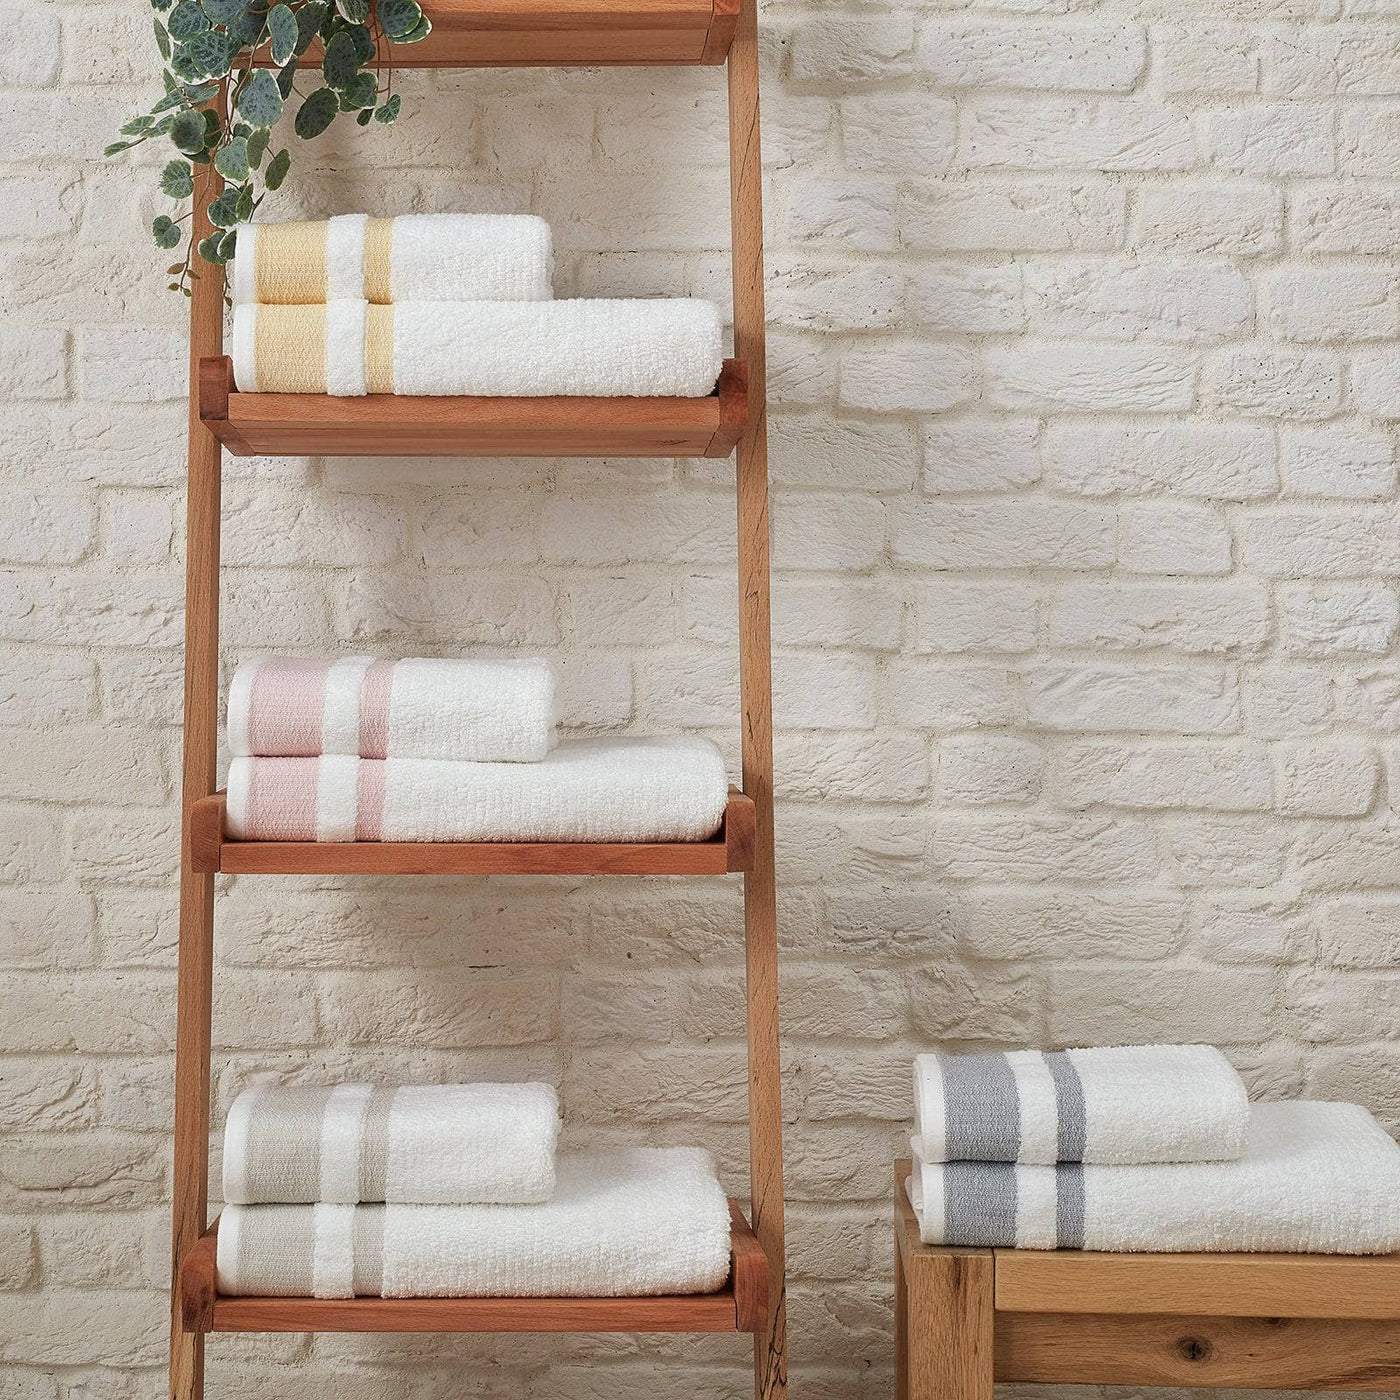 Charlotte Striped 100% Turkish Cotton Bath Towel, Beige Bath Towels sazy.com